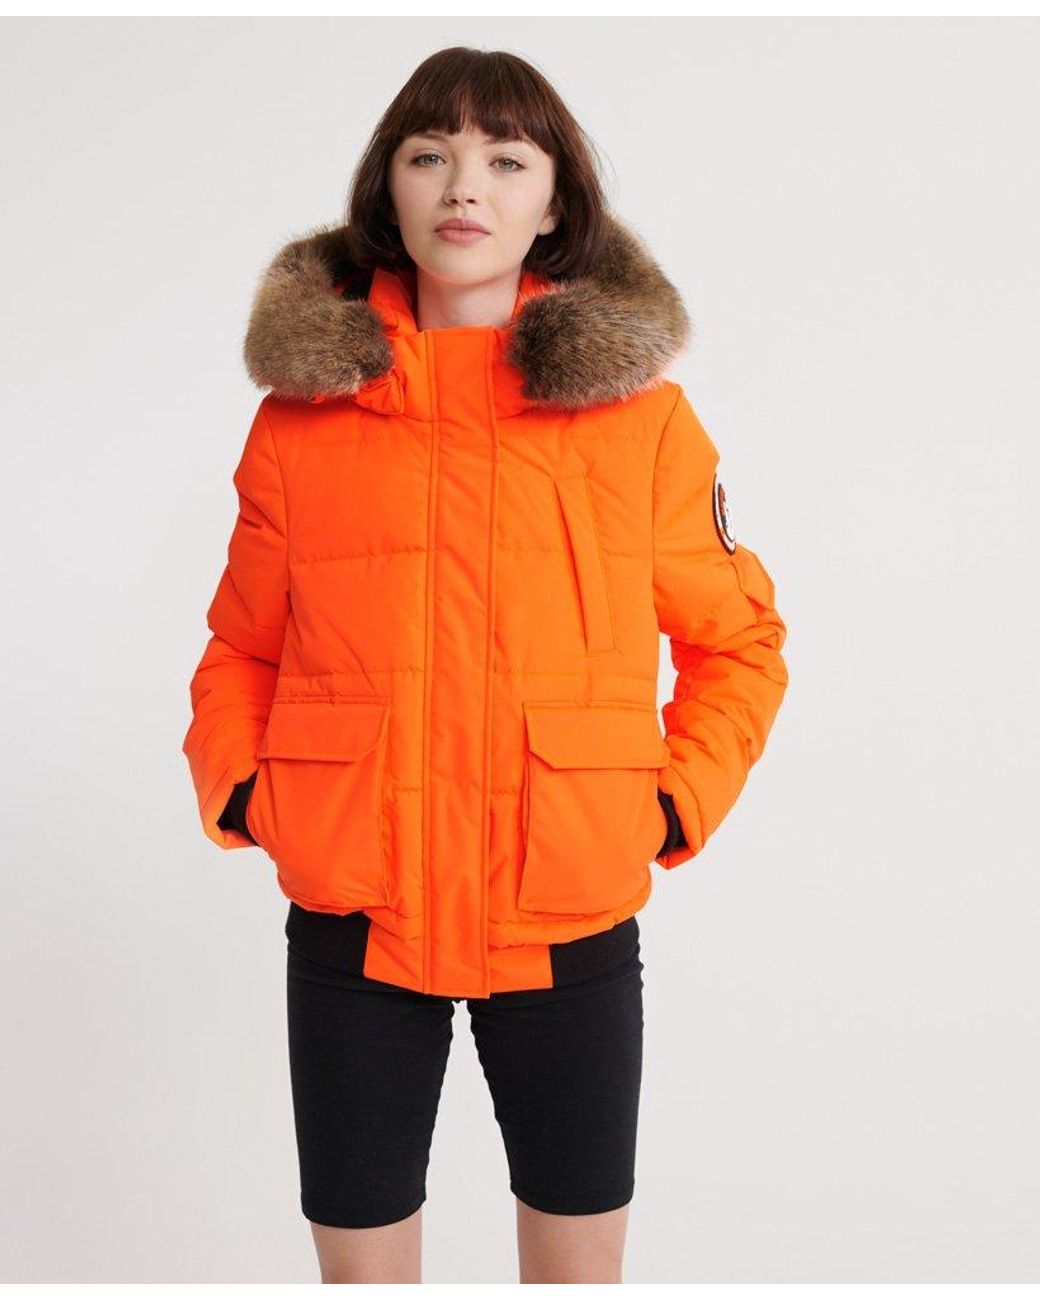 Superdry Fleece Ella Everest Bomber Jacket in Orange - Lyst